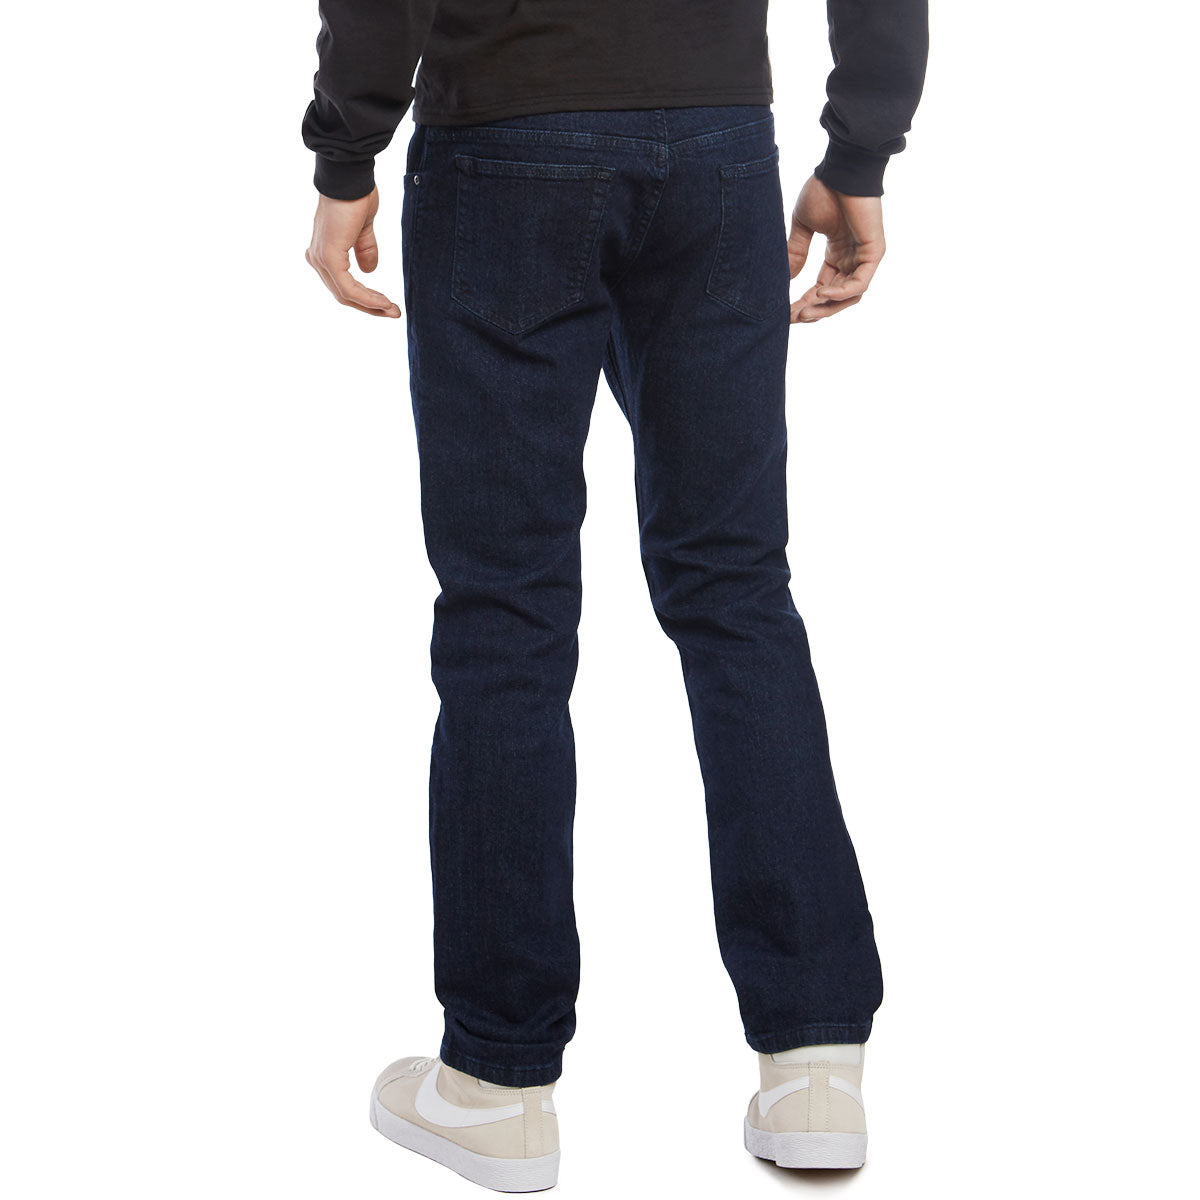 CCS Slim Fit Jeans - Raw Denim image 3